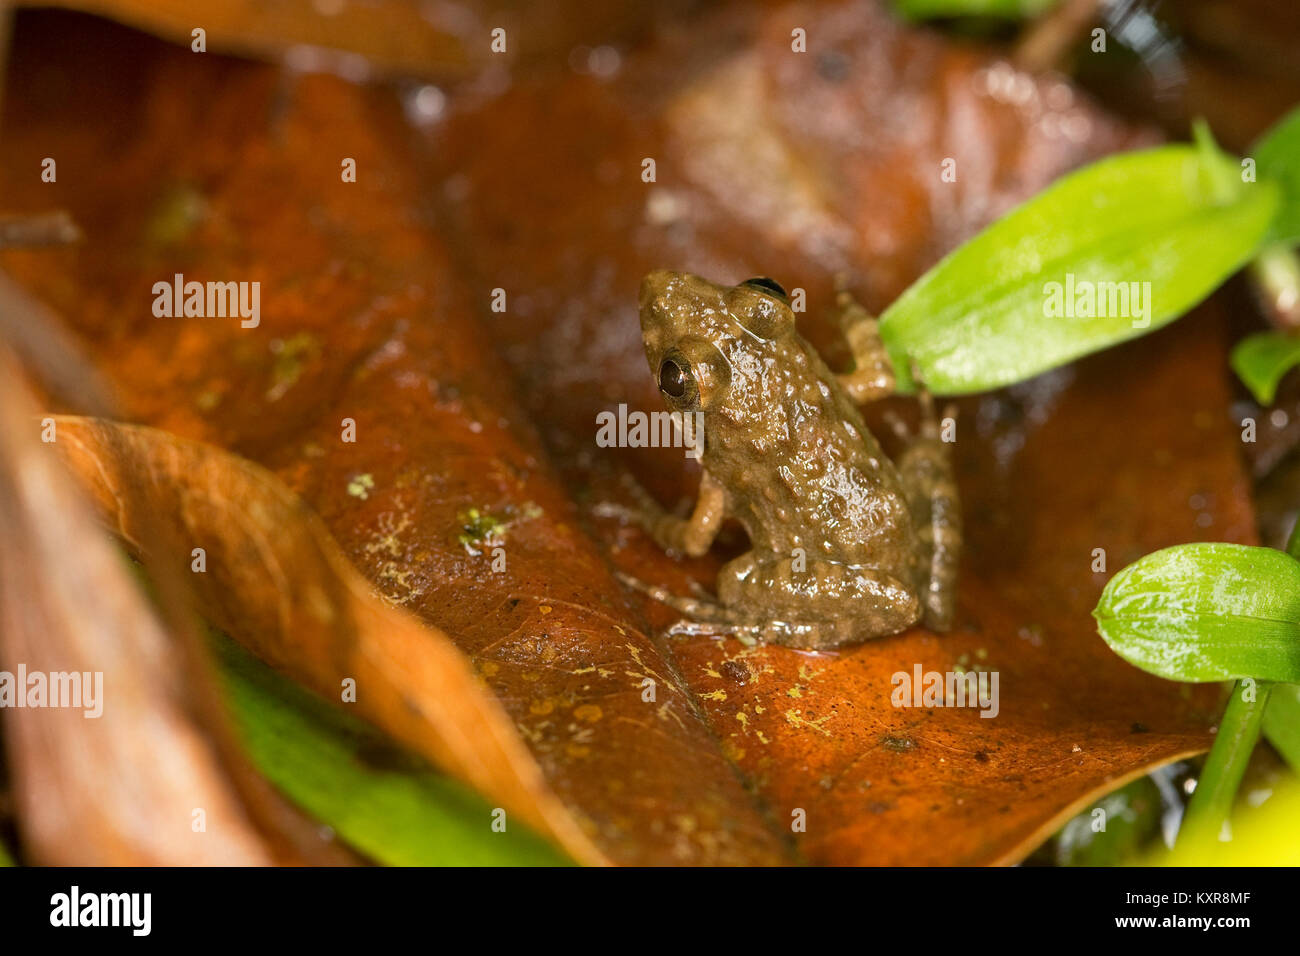 Indian Cricket Frog (Fejervarya limnocharis) Stock Photo